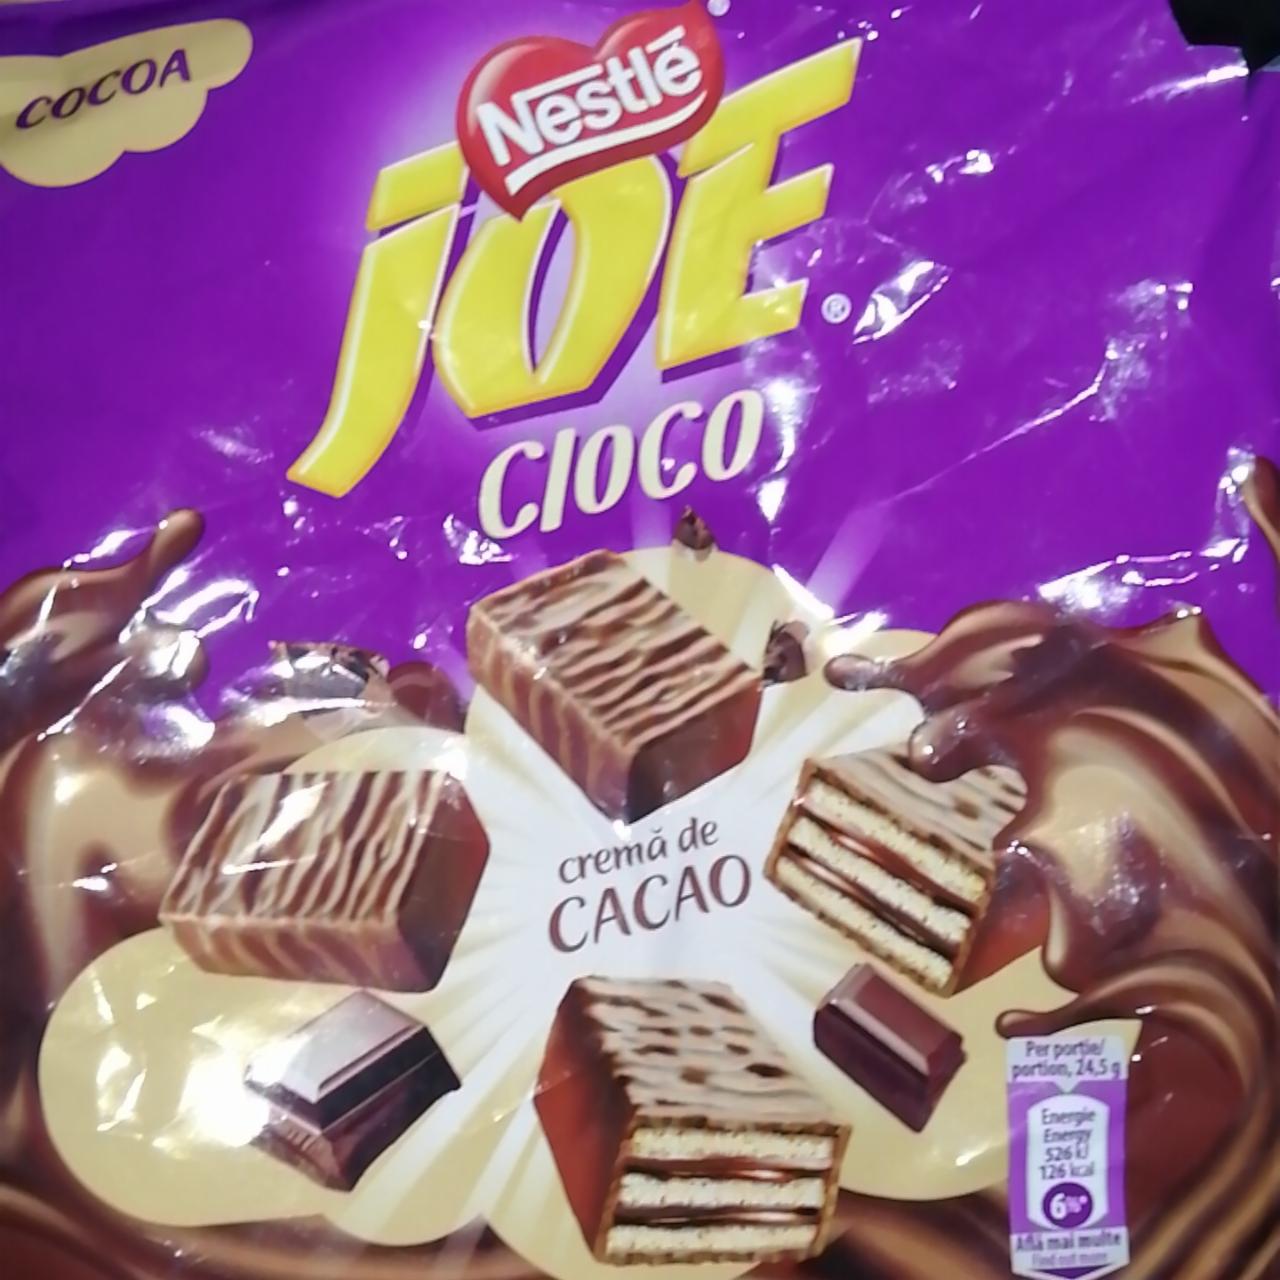 Фото - вафли в шоколаде joe cloco Nestlé